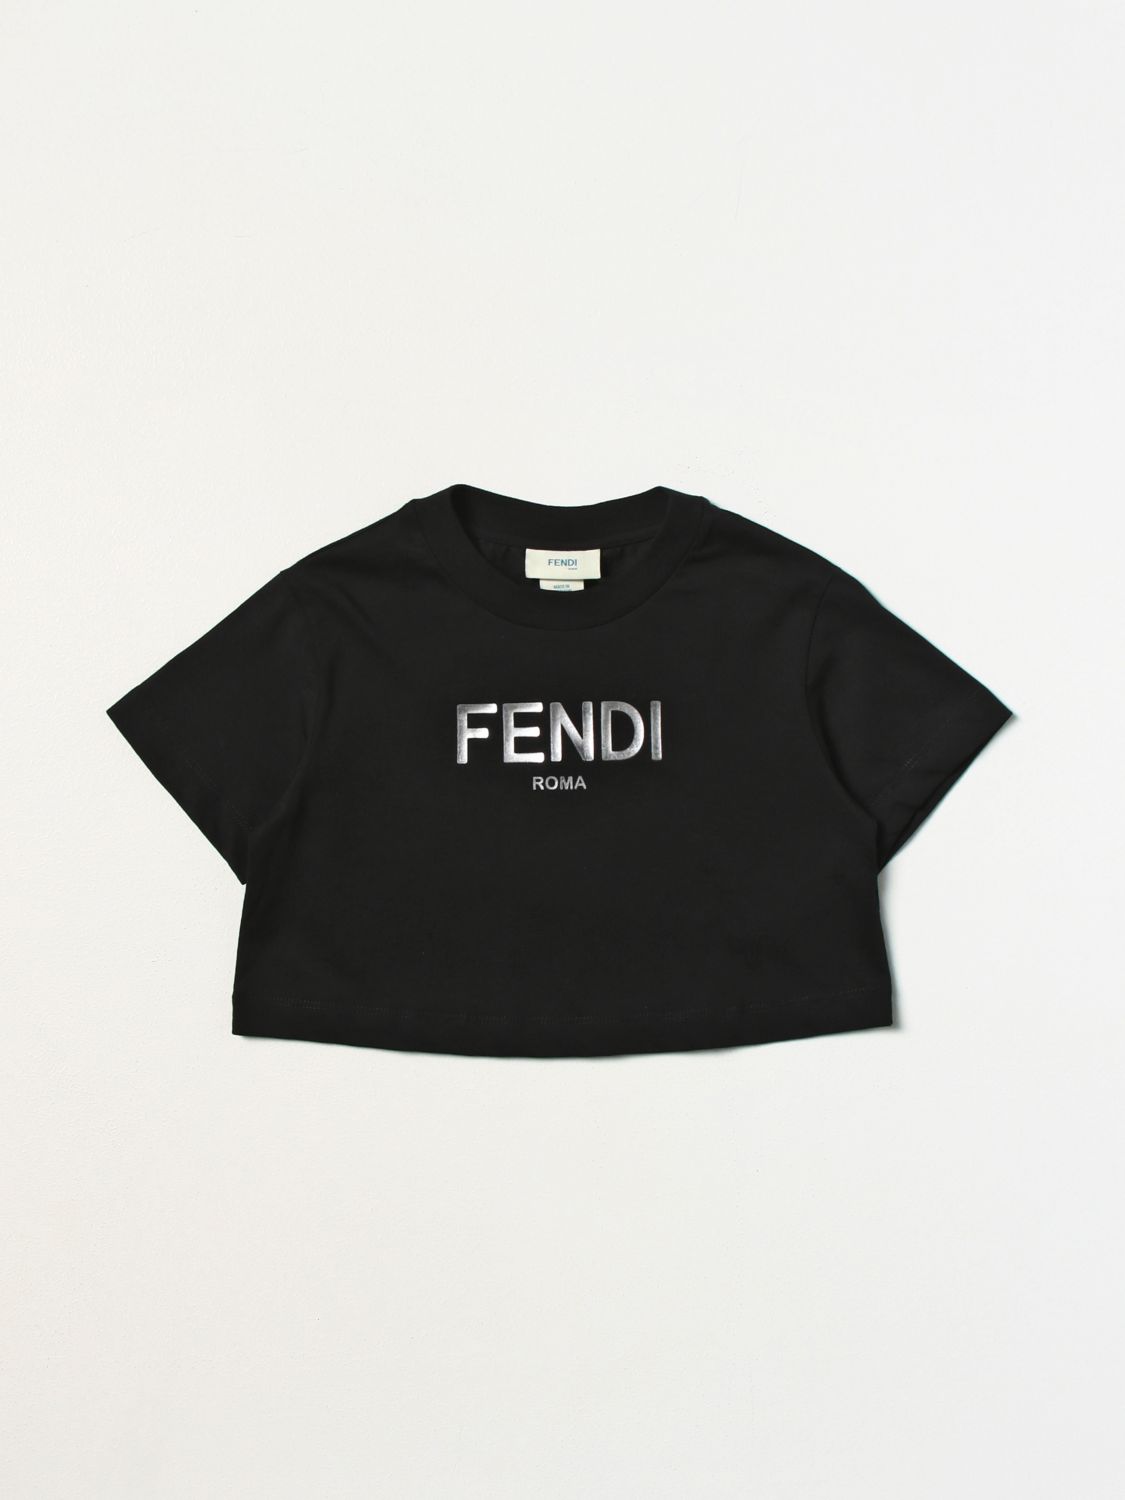 FENDI T-SHIRT FENDI KIDS KIDS,391472002